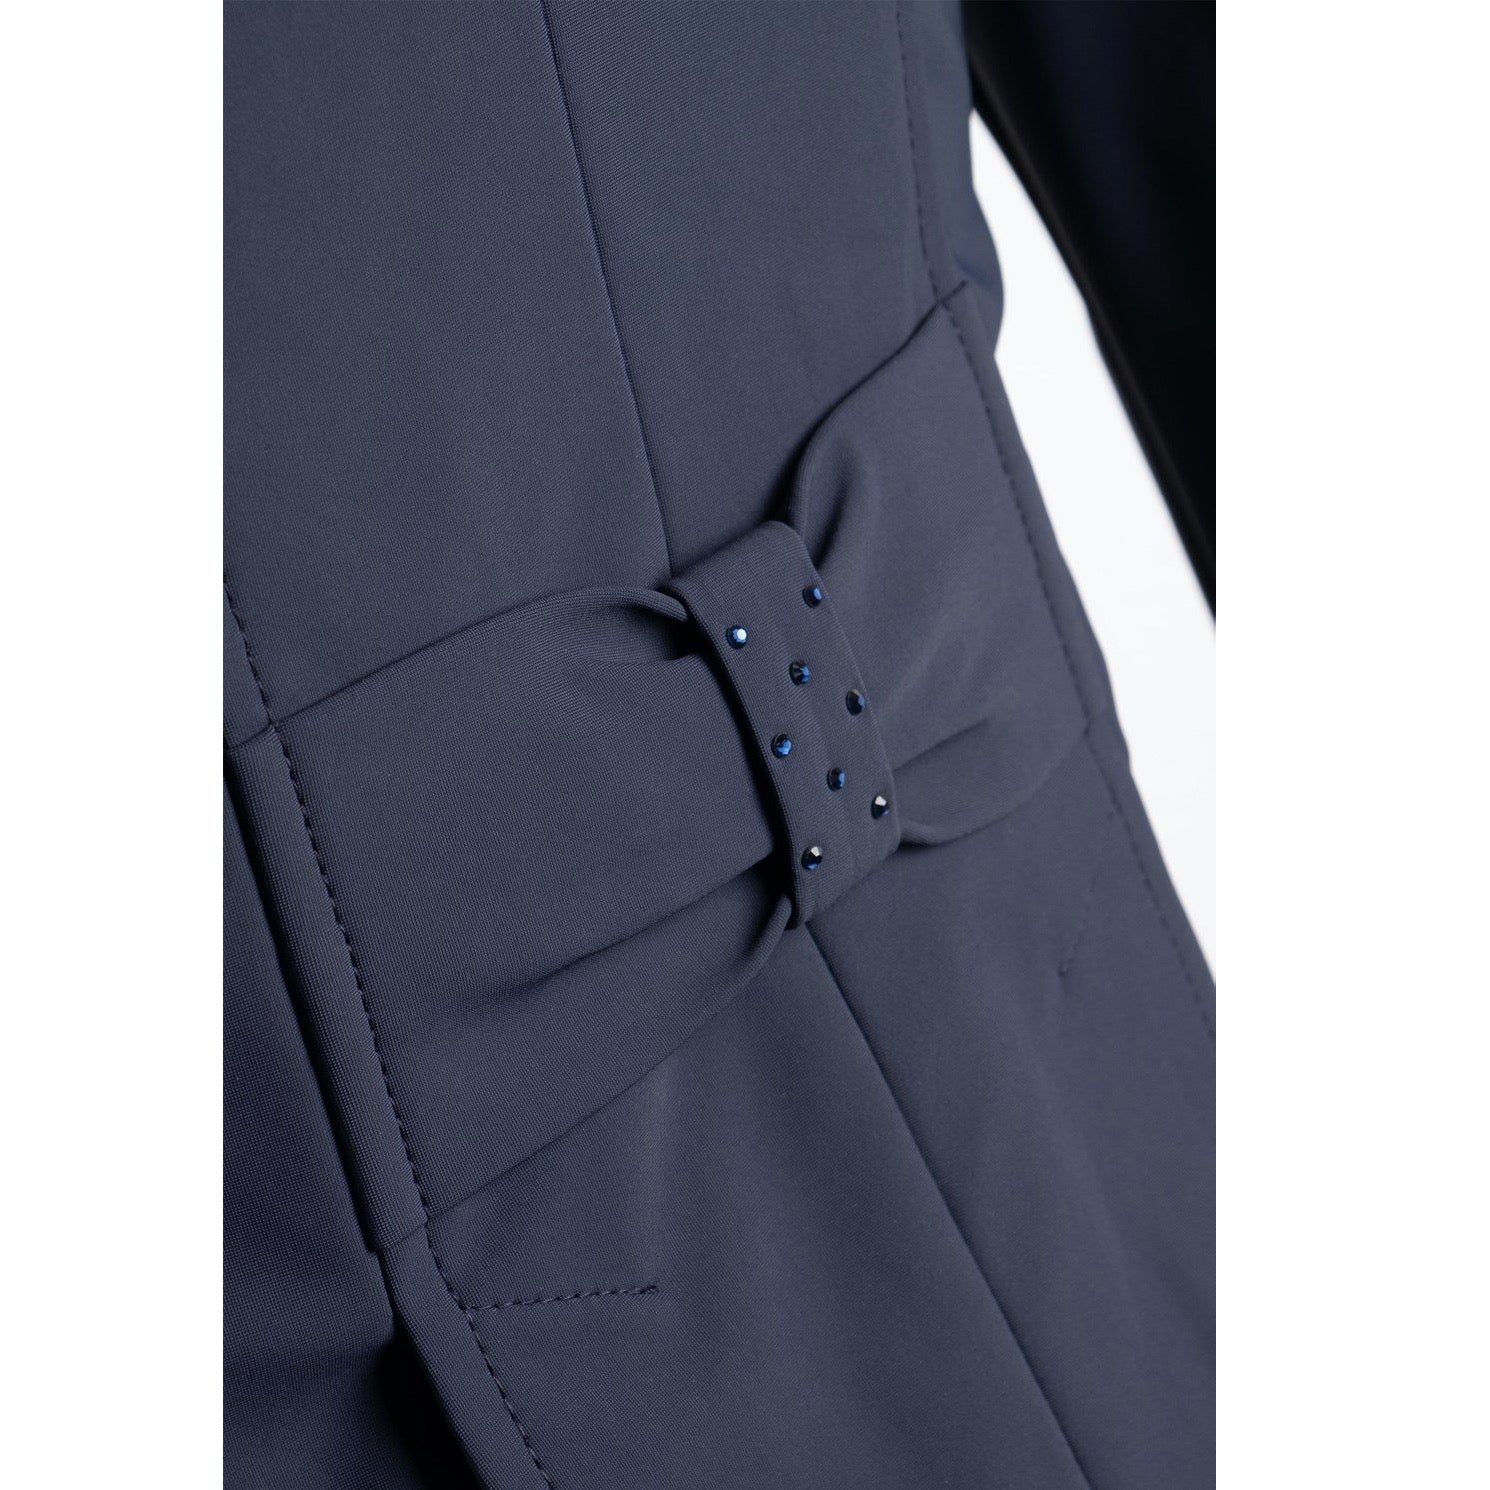 Montar Dressage Softshell Show Jacket - Short Tailcoat, Navy